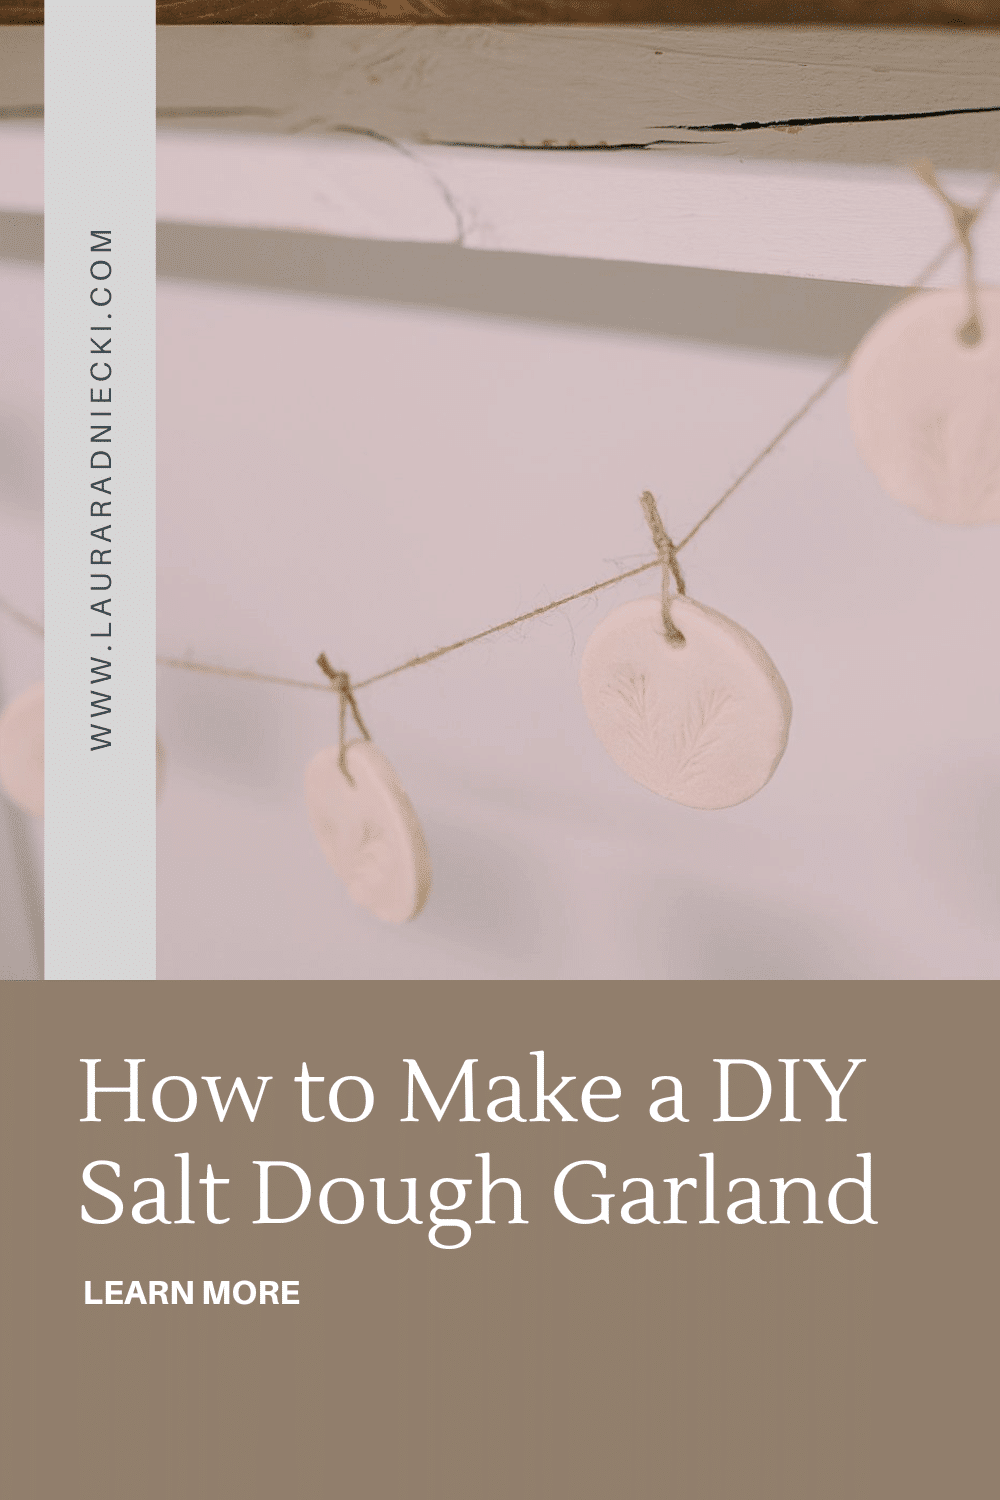 How to Make a DIY Salt Dough Garland